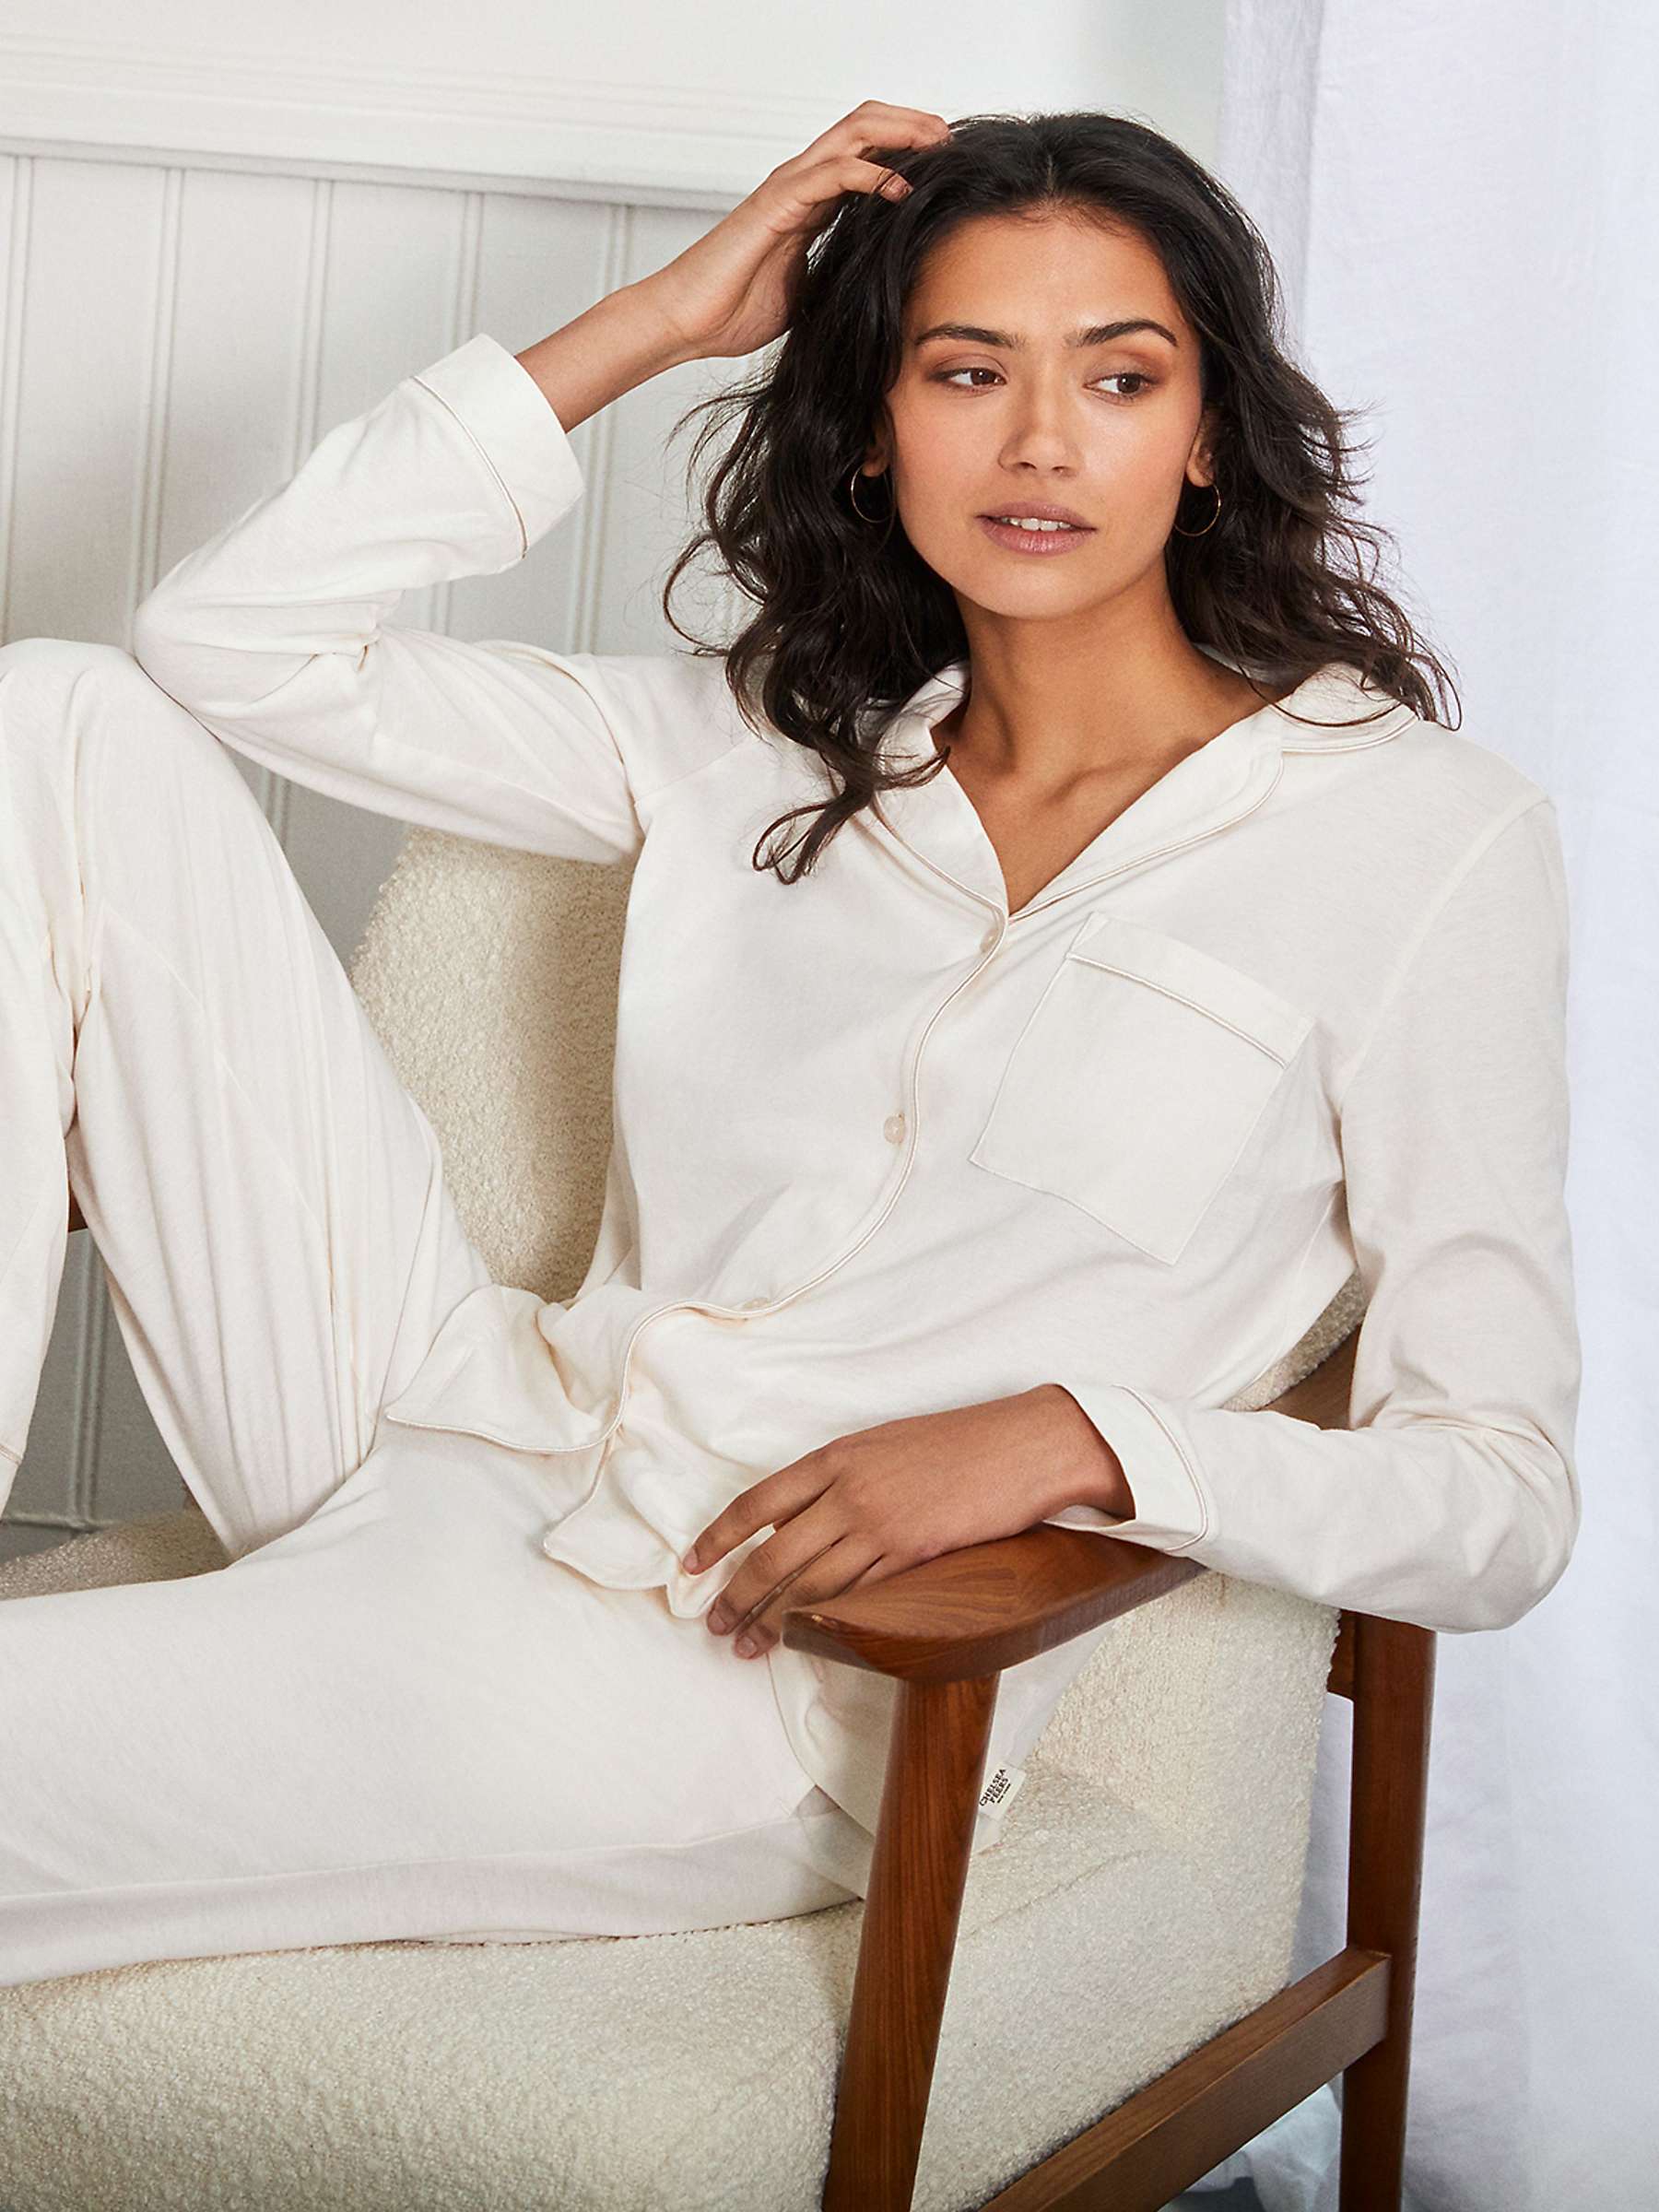 Buy Chelsea Peers Organic Cotton Pyjama Set Online at johnlewis.com